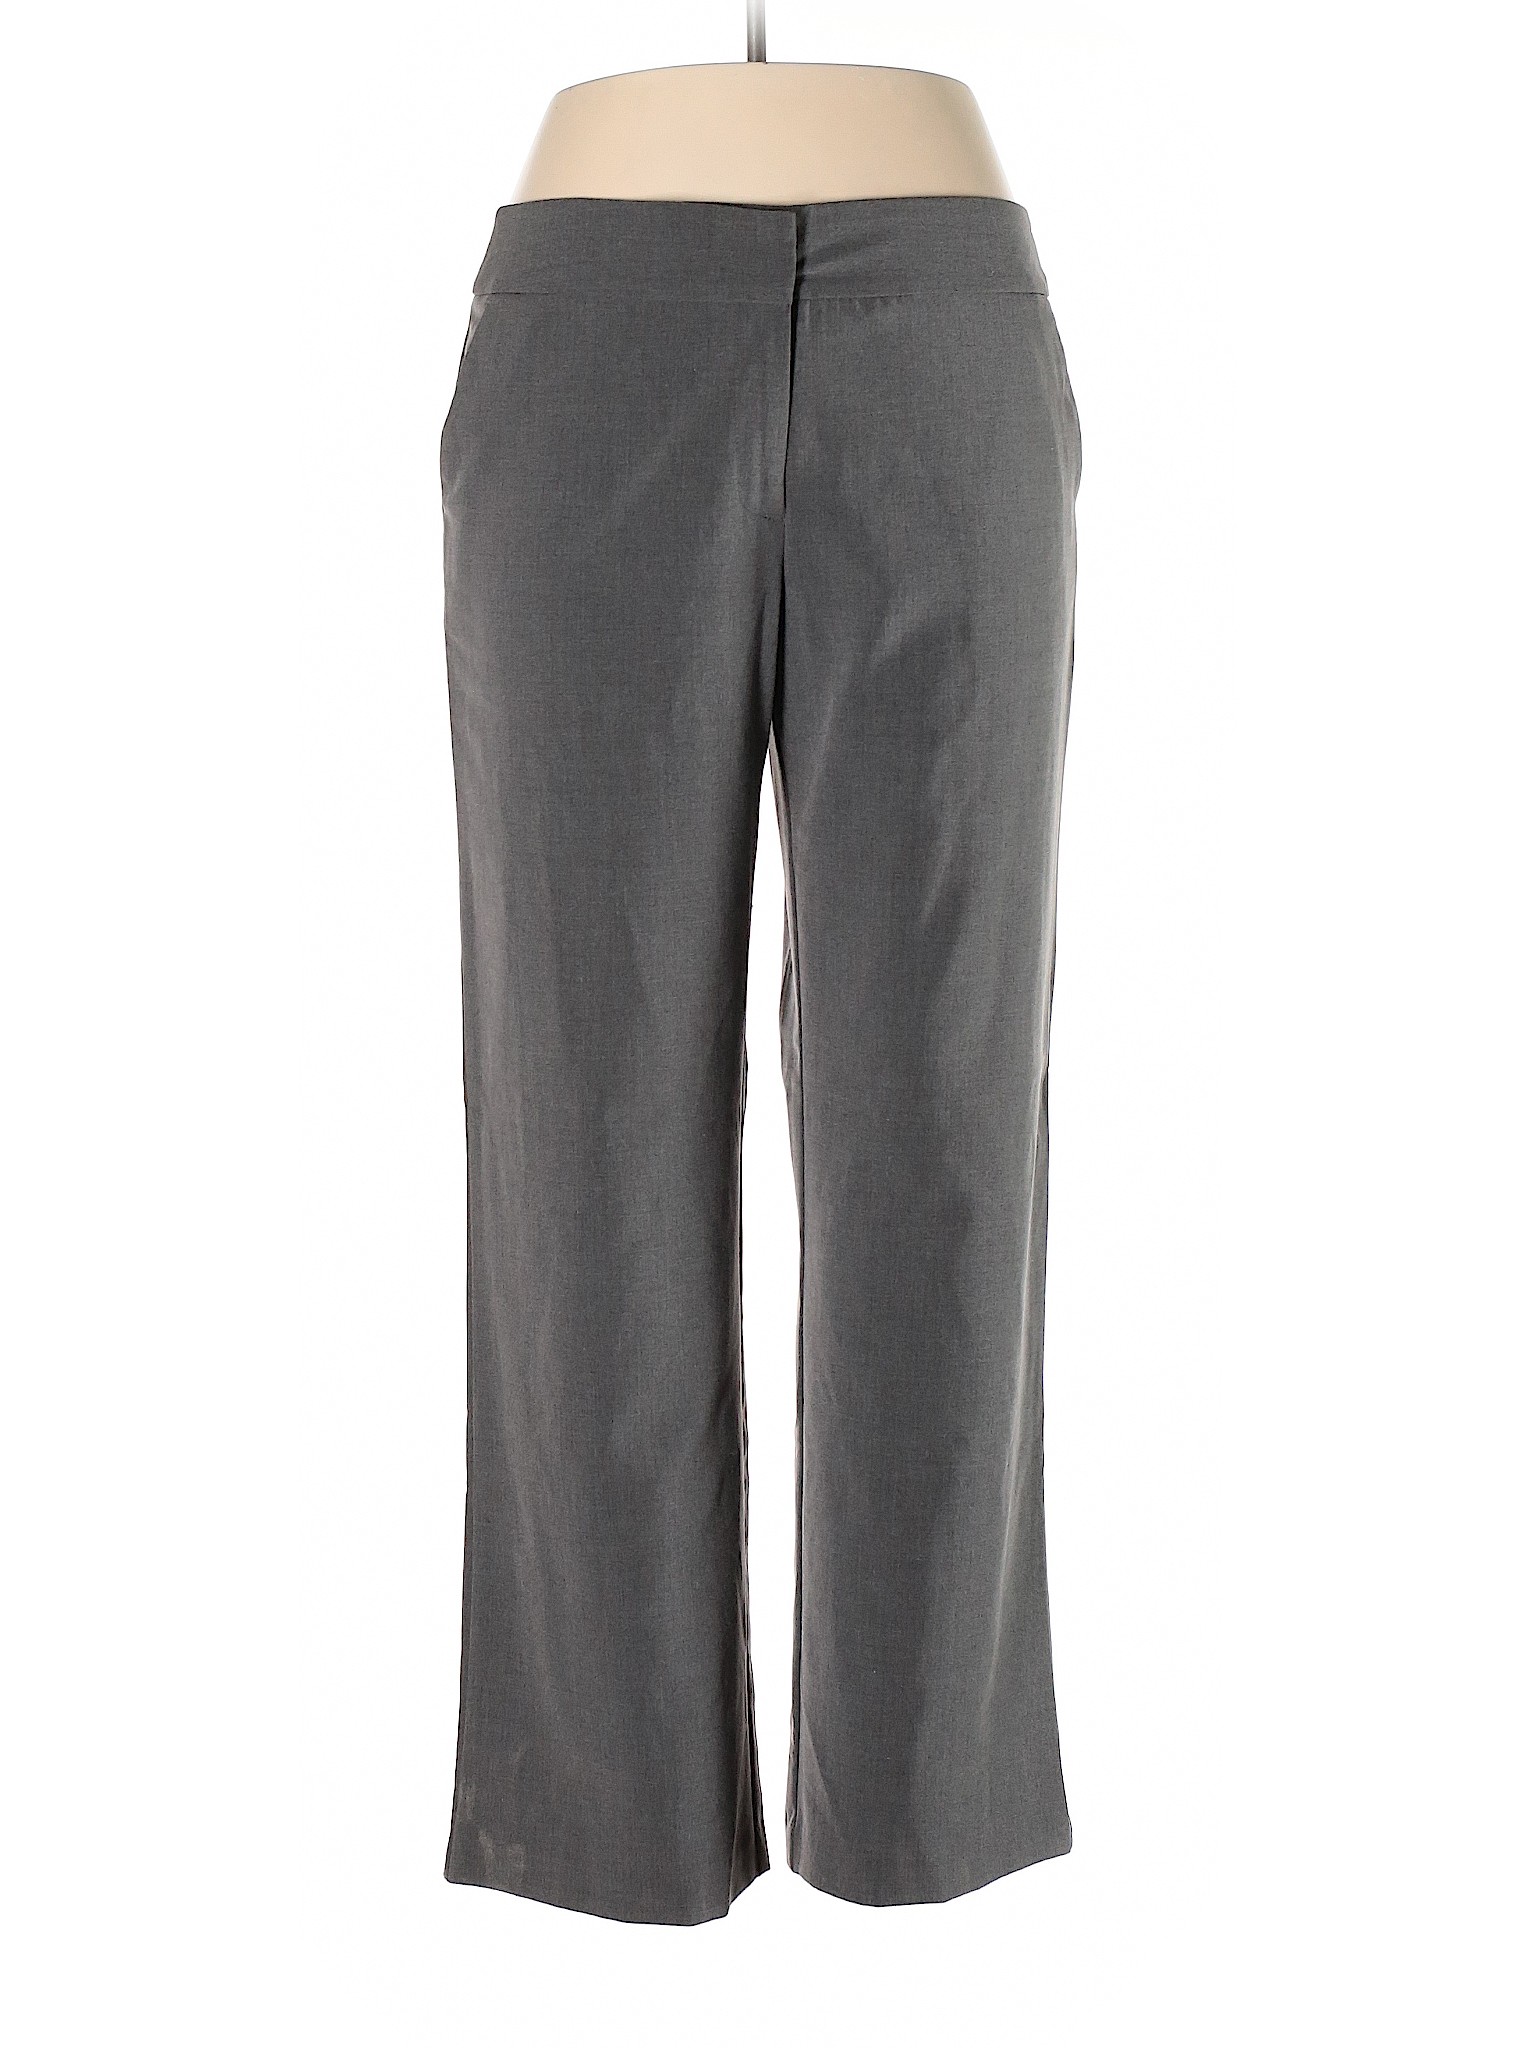 George Women Gray Dress Pants 14 | eBay